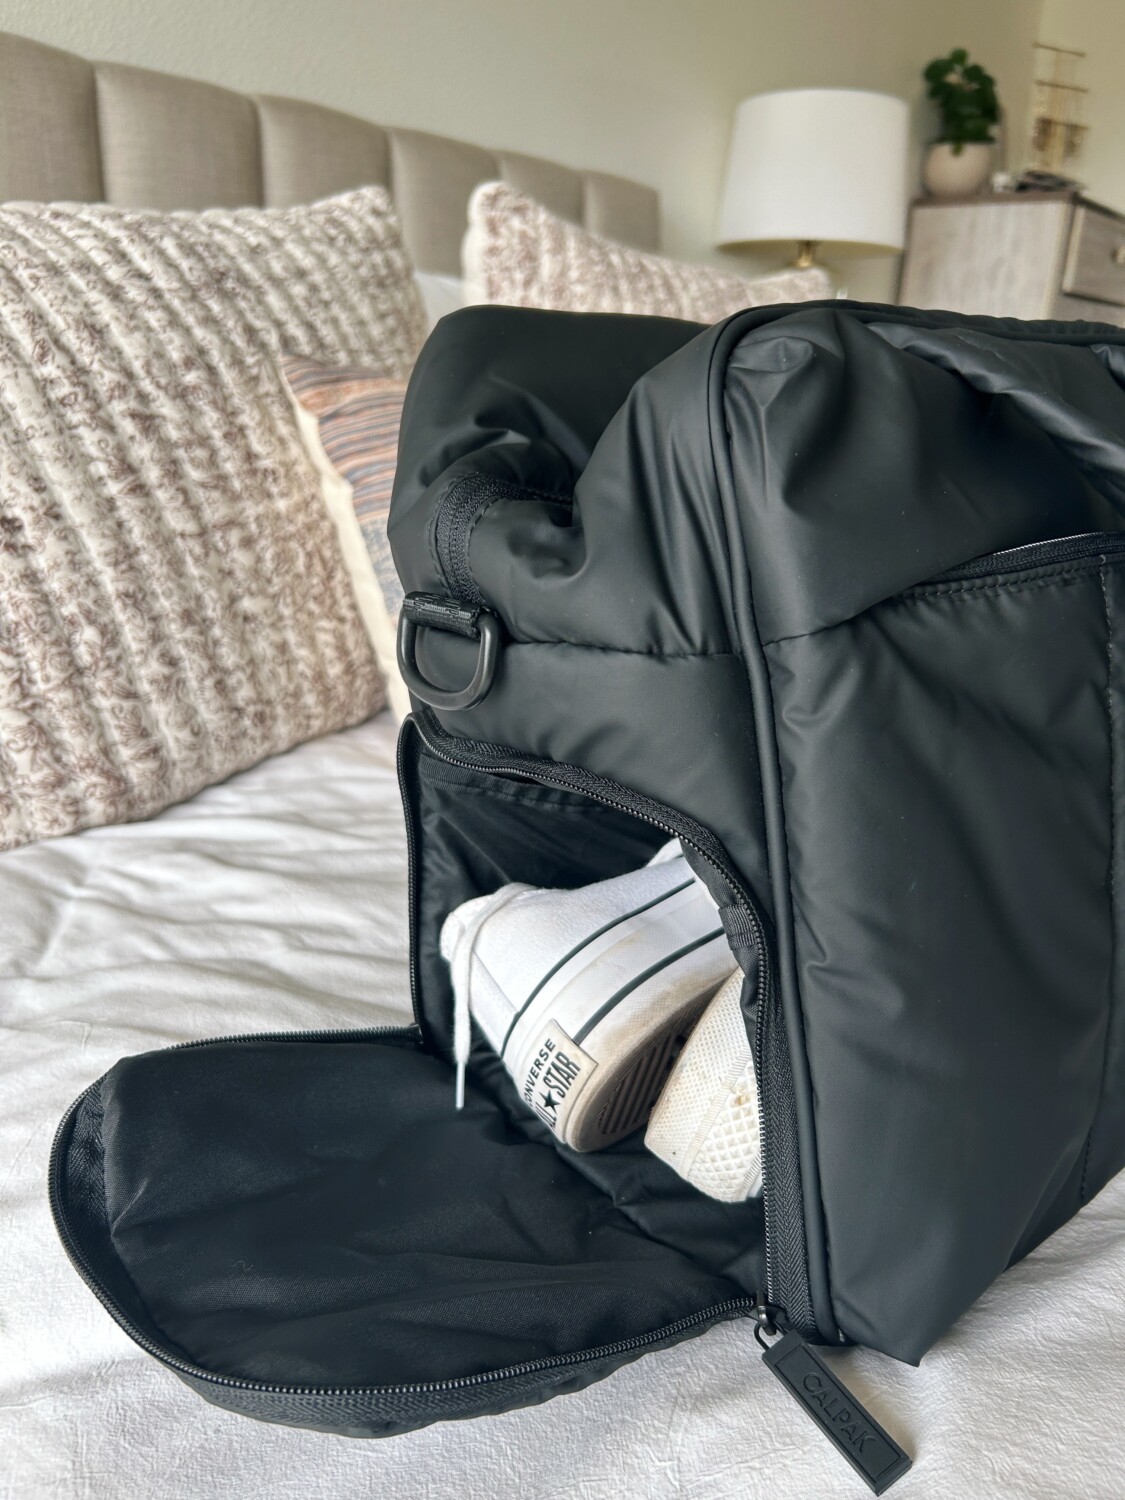 shoe compartment in duffel bag